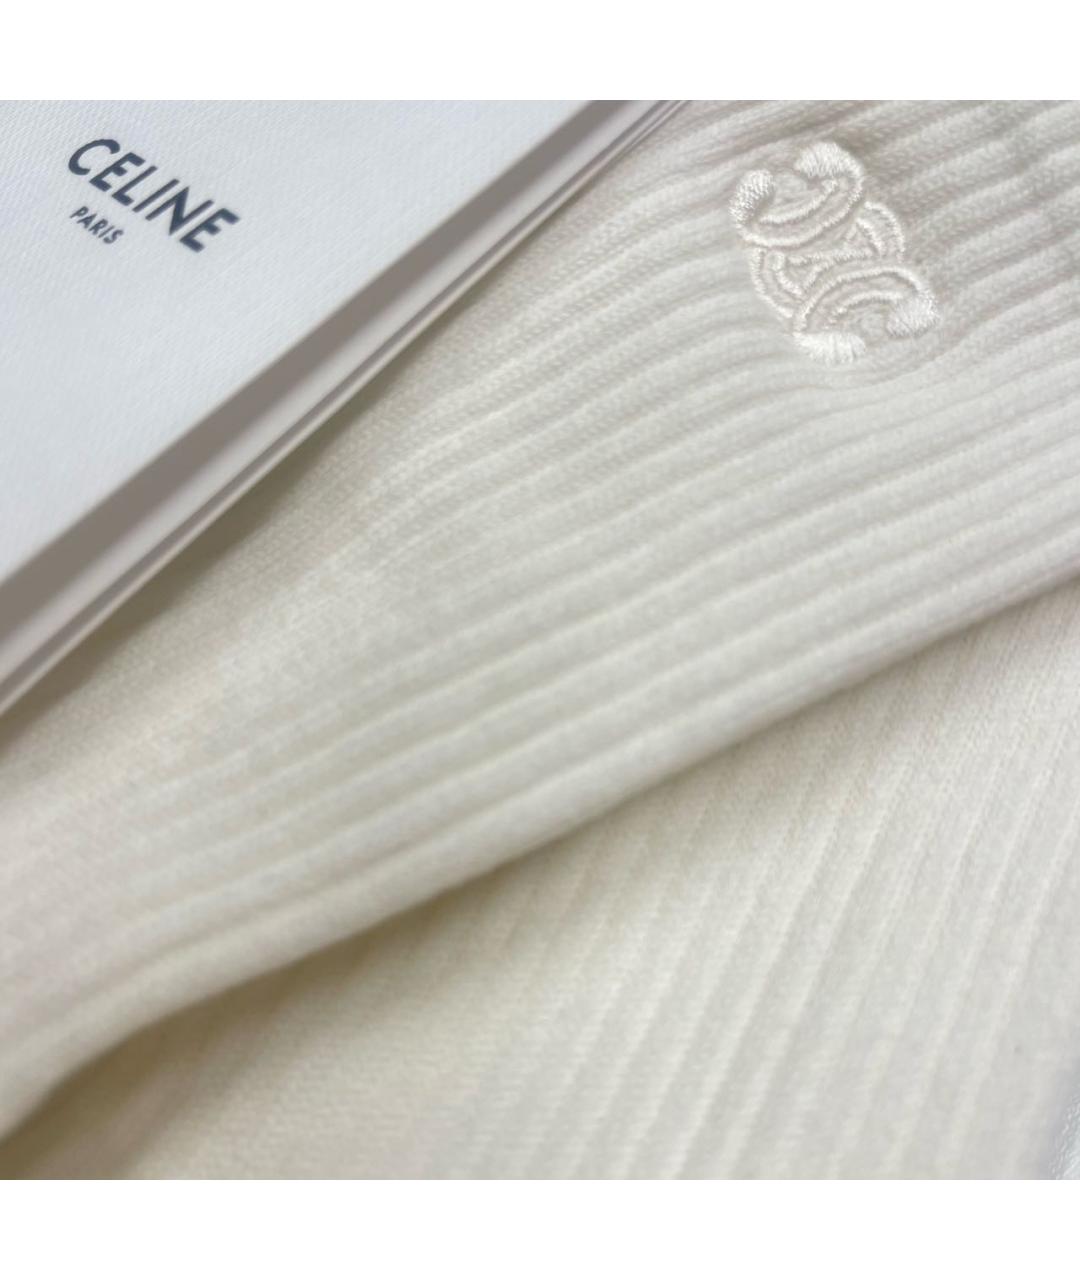 CELINE PRE-OWNED Белые носки, чулки и колготы, фото 3